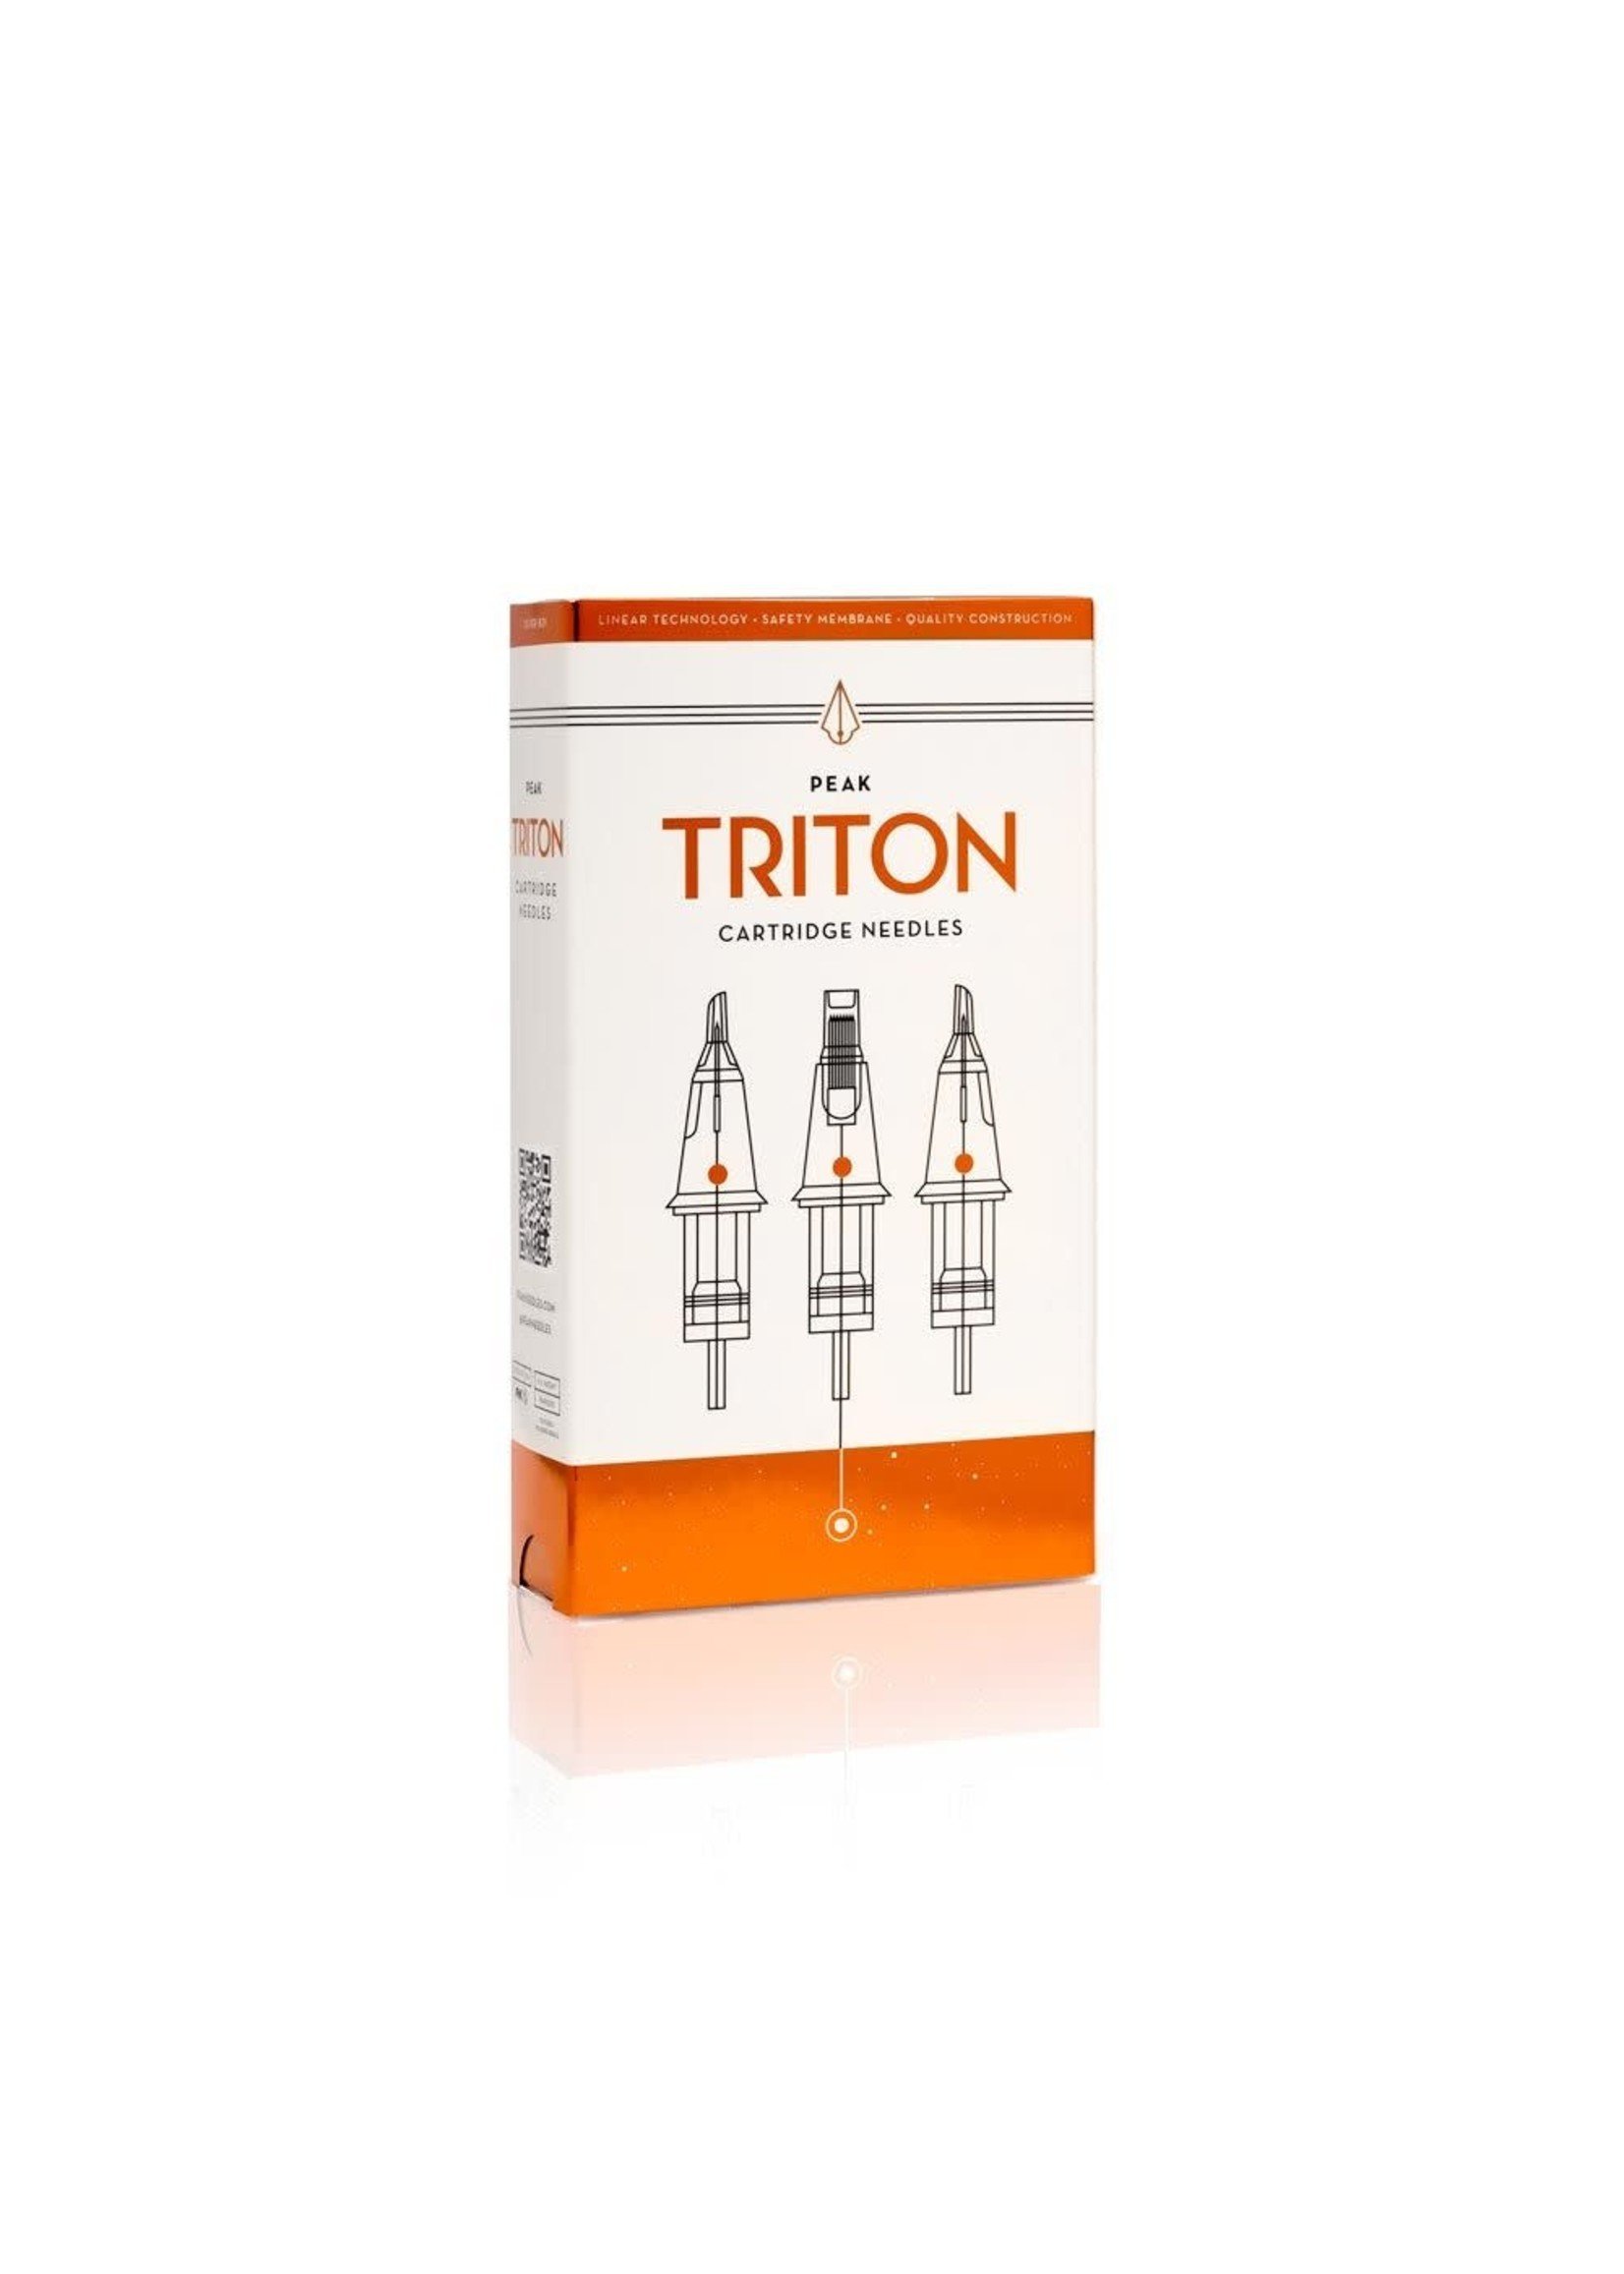 Peak Triton Cartridge Needles — 3 Super Tight Round Liners (20)